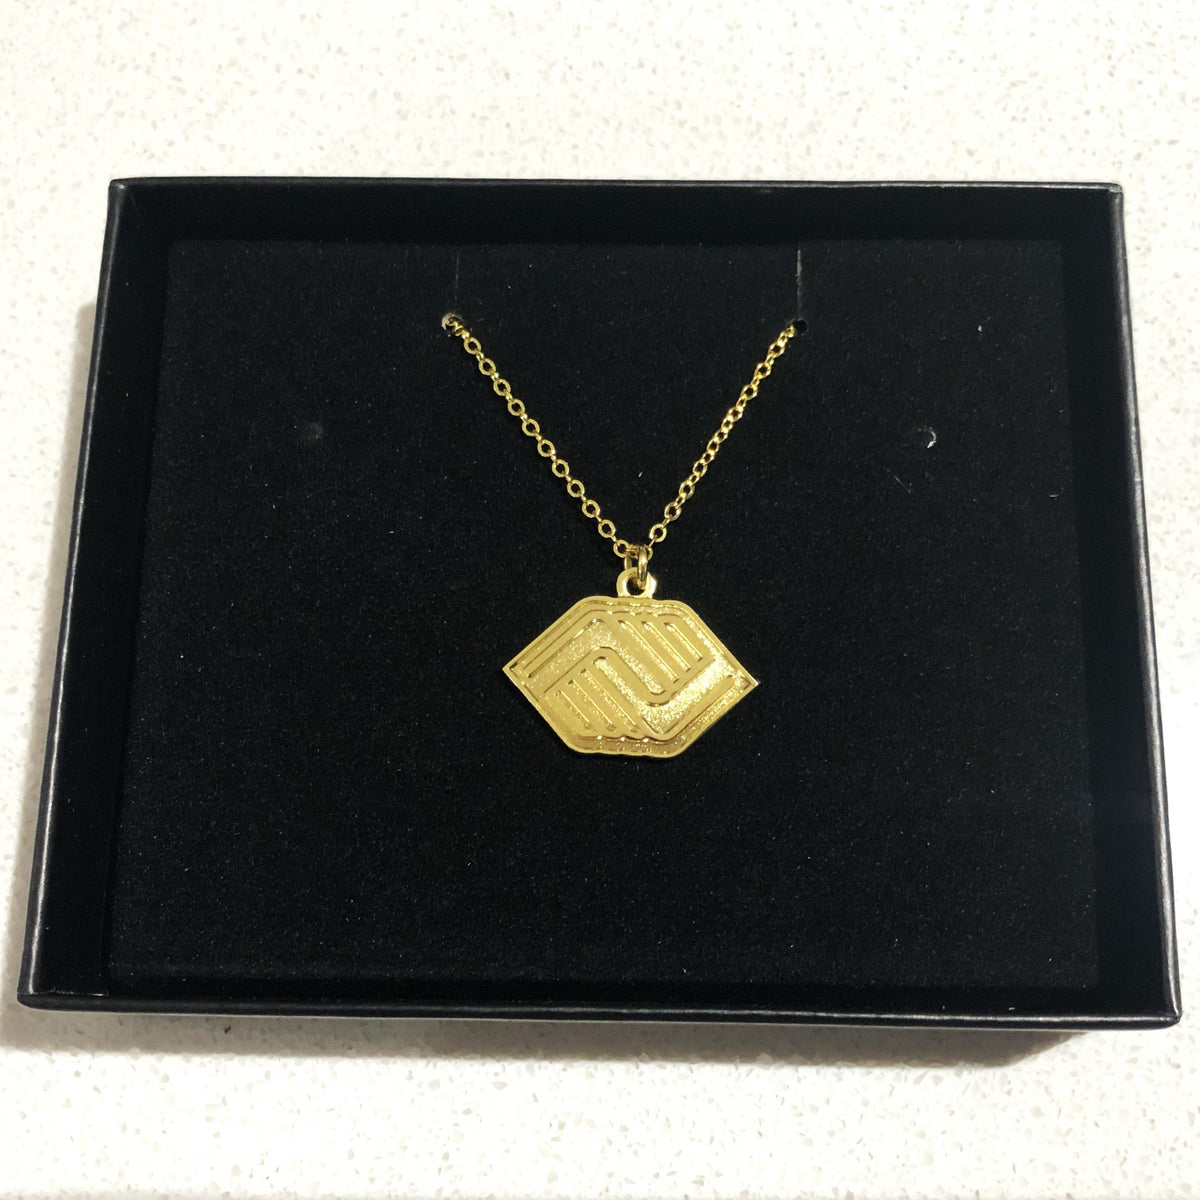 BGCA Charm Necklace in Black Gift Box